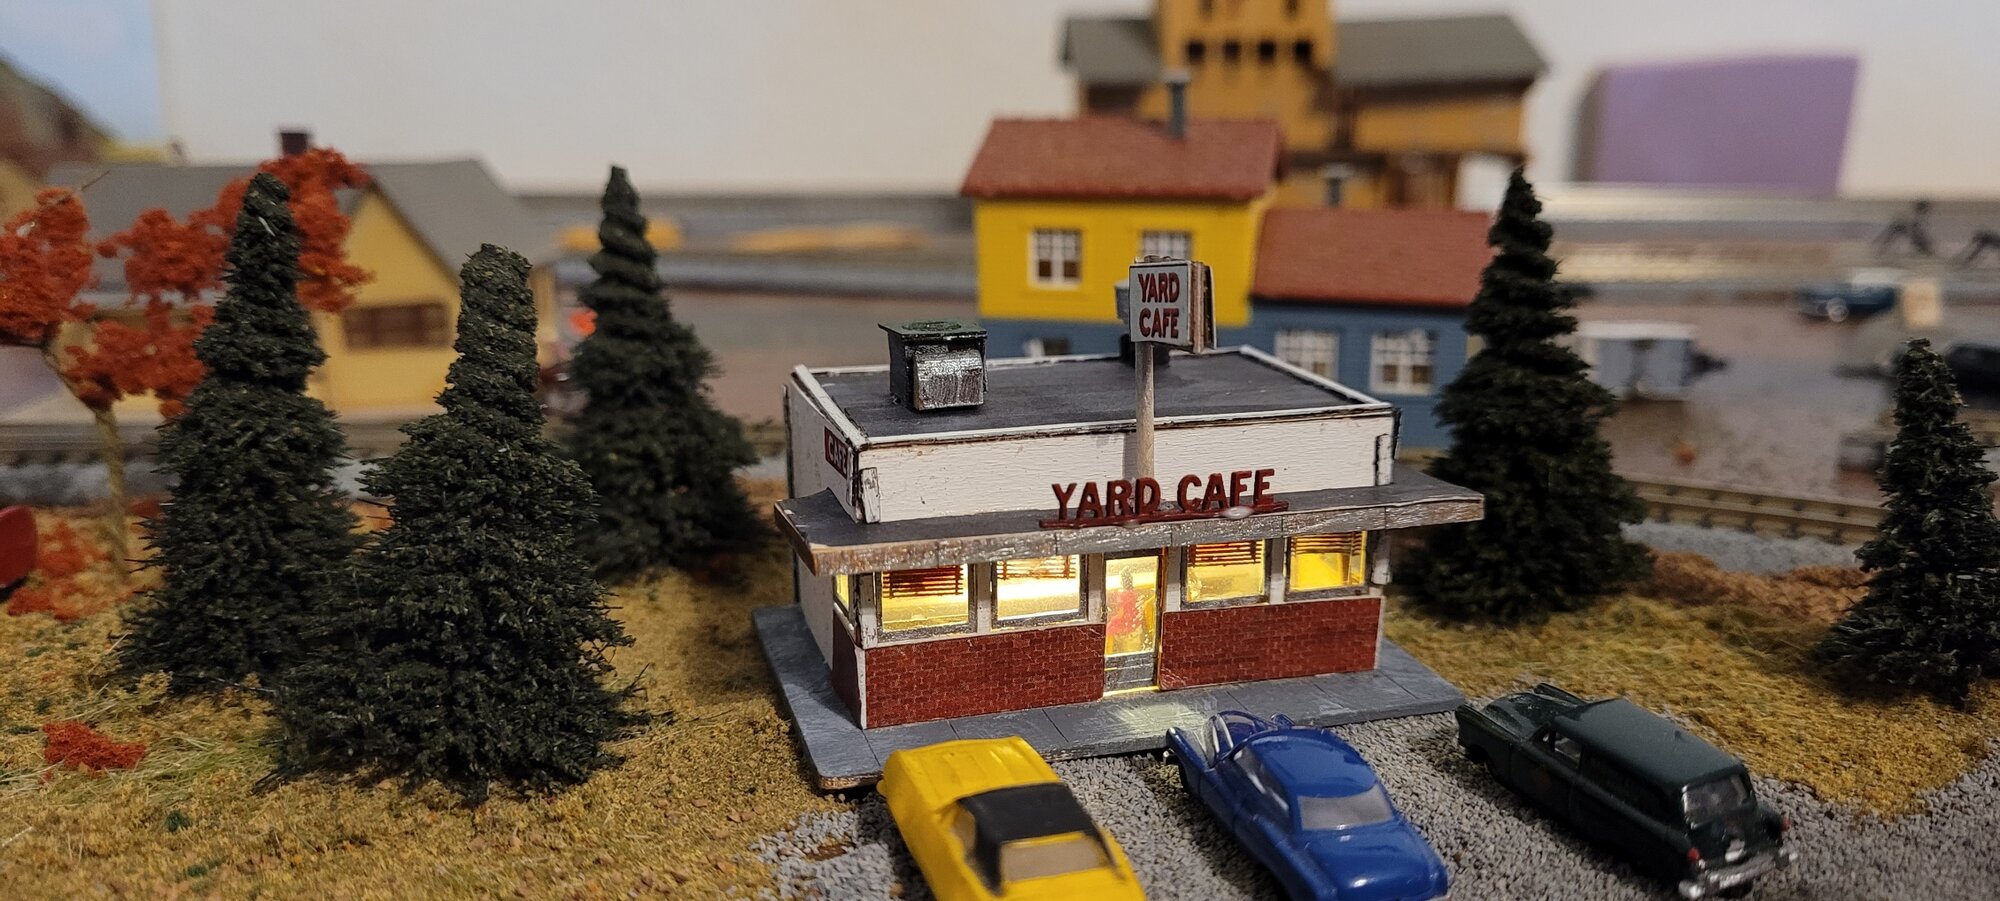 Yard Cafe 2.jpg